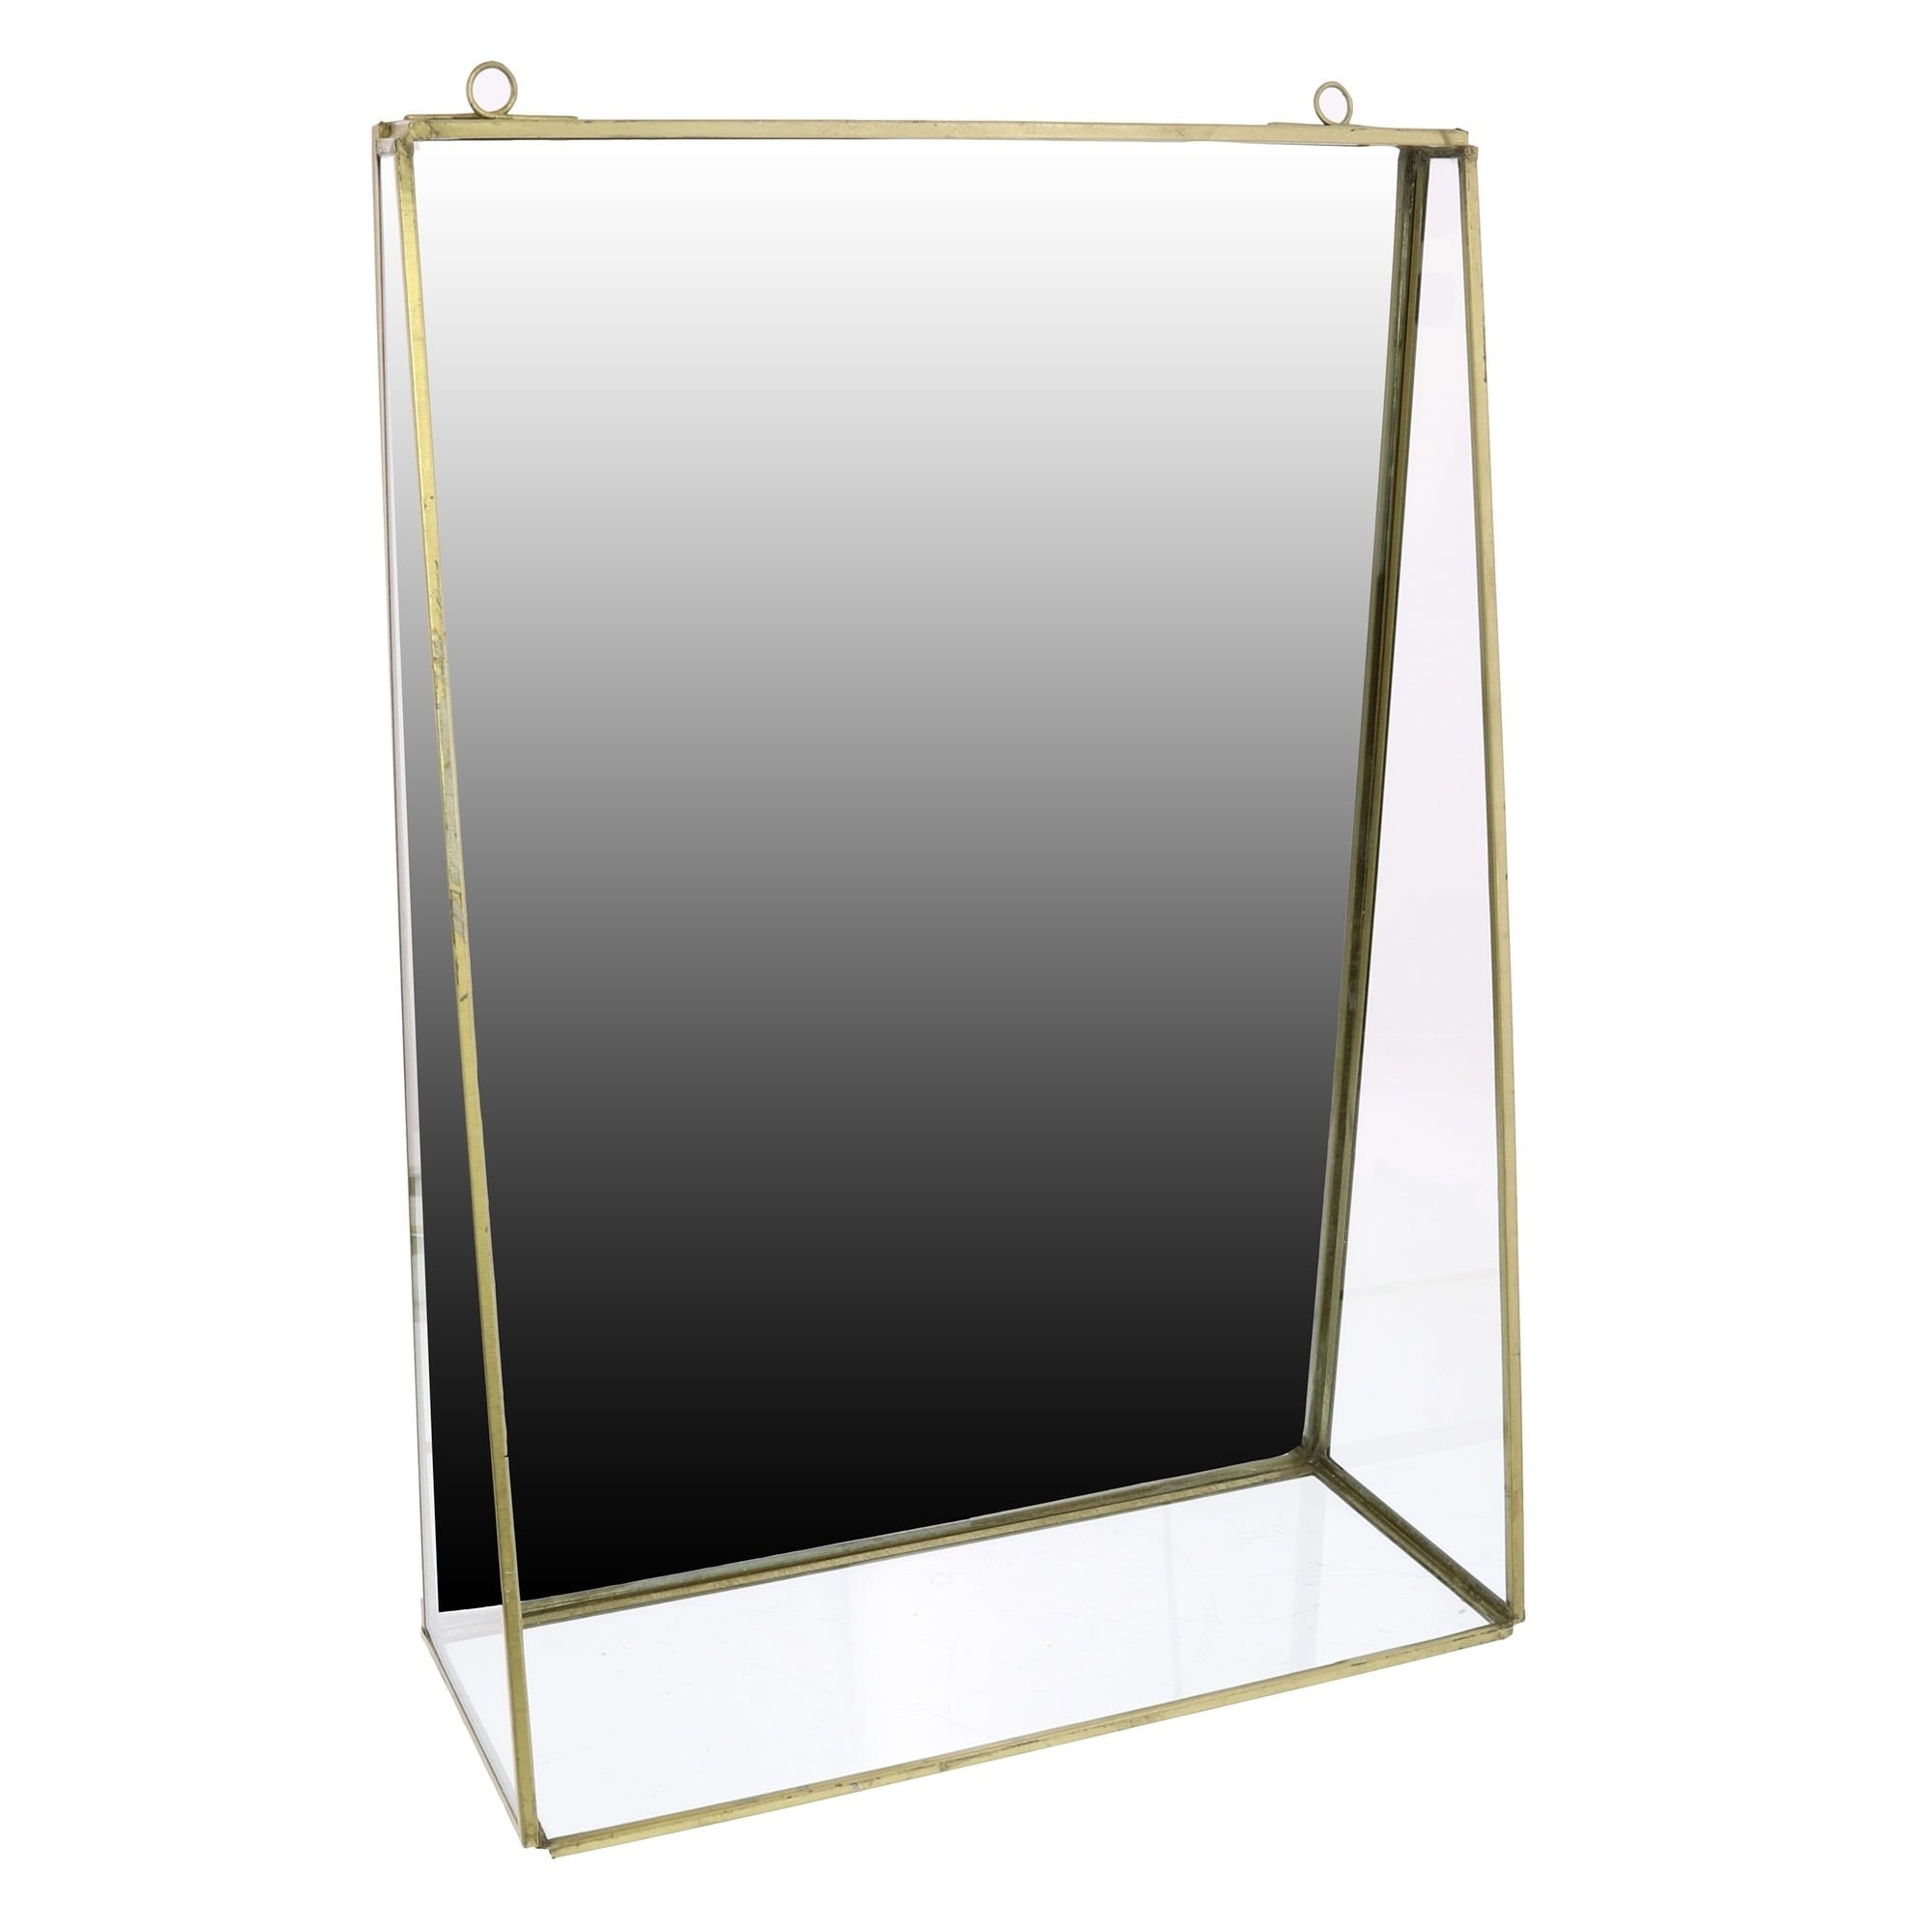 gold metal vanity mirror with shelf - 4"W x 2.6"D x 14.75"H